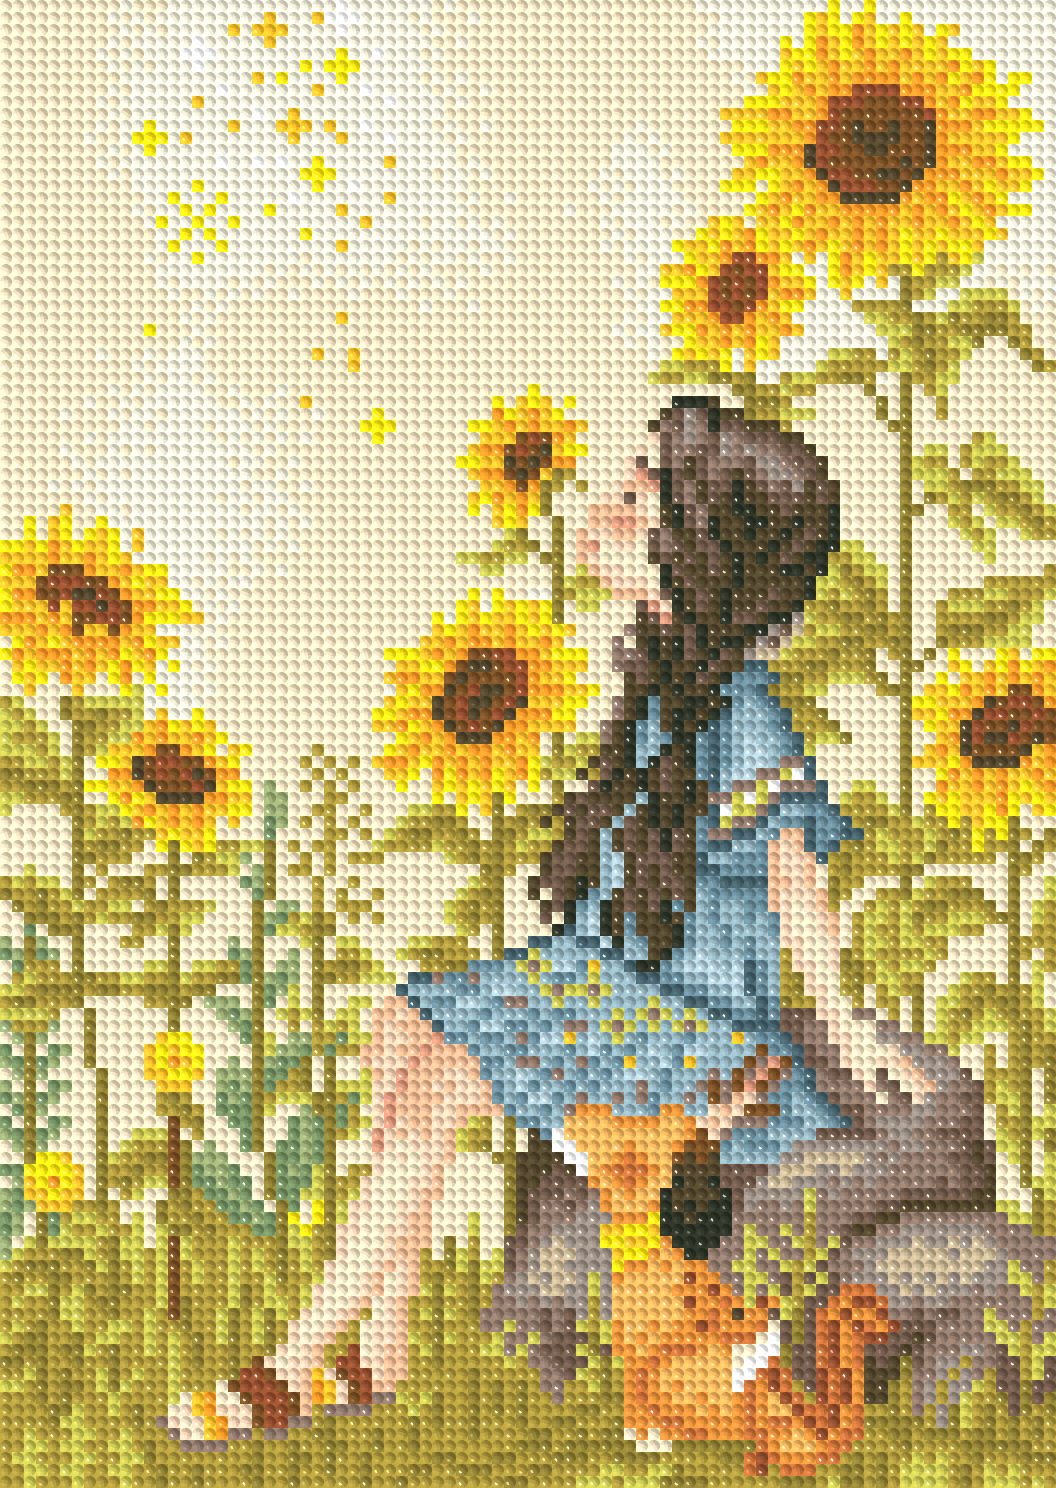 New Upgrade Diamond Painting - Sunflower Girl